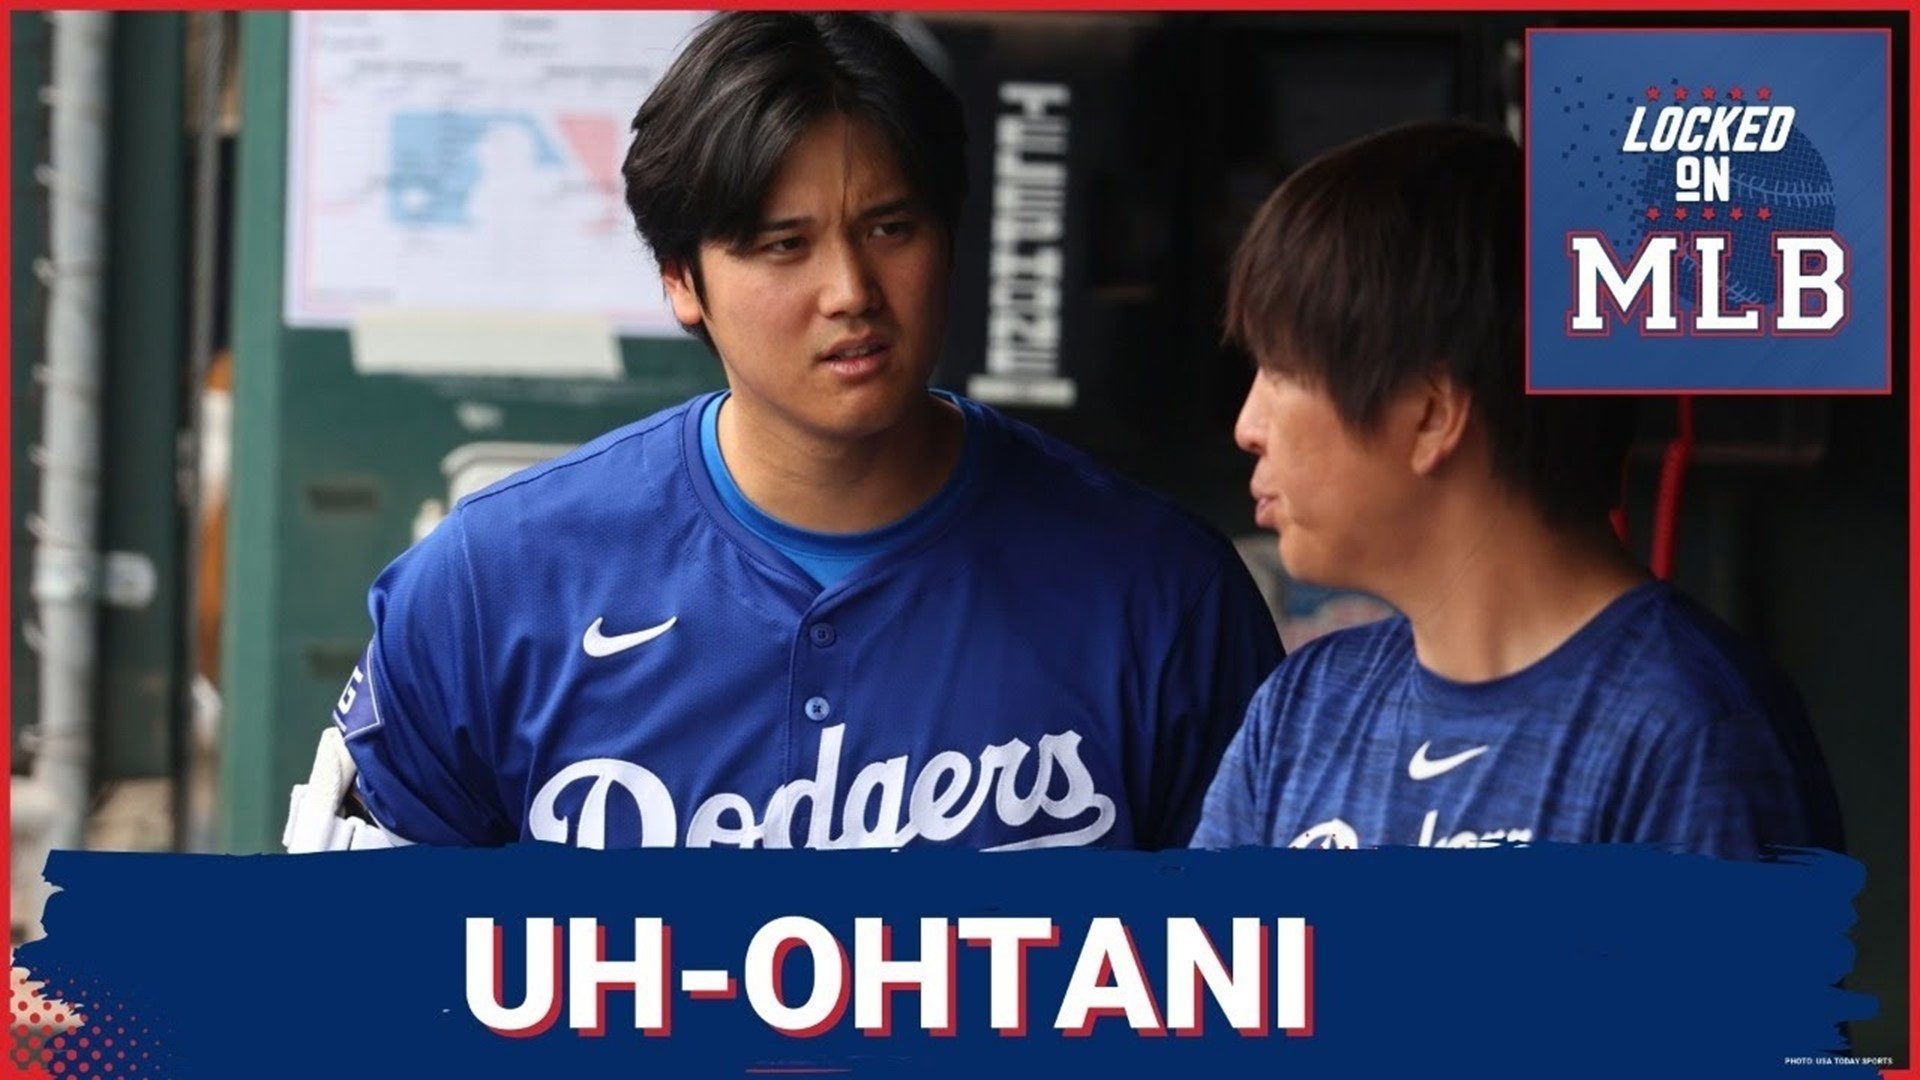 The mess involving Dodgers star Shohei Ohtani and his interpreter, Ippei Mizuhara, keeps getting more convoluted.